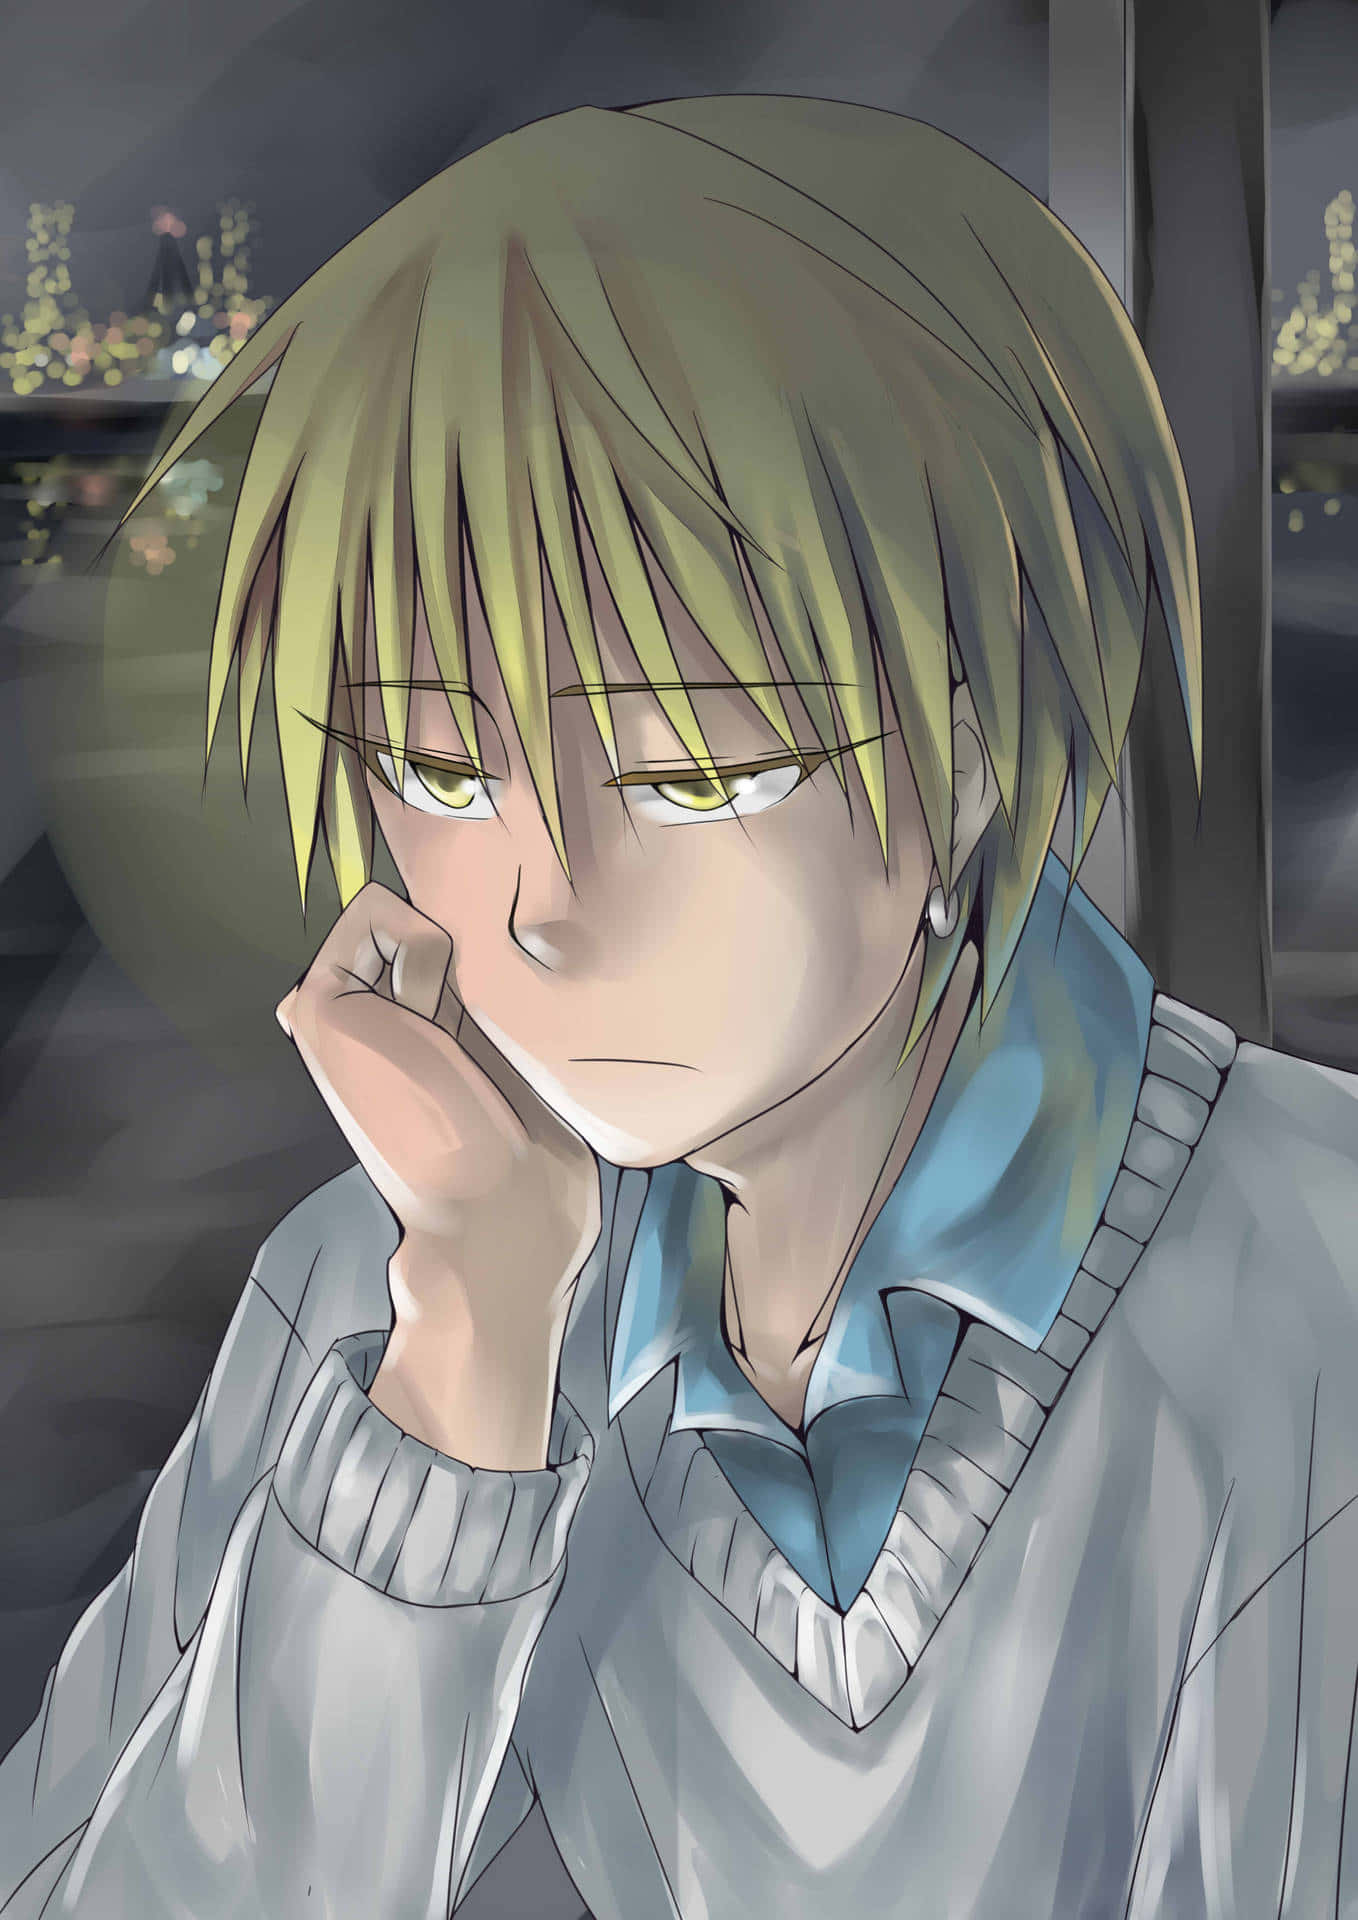 Contemplative_ Anime_ Boy_with_ Sad_ Expression.jpg Wallpaper